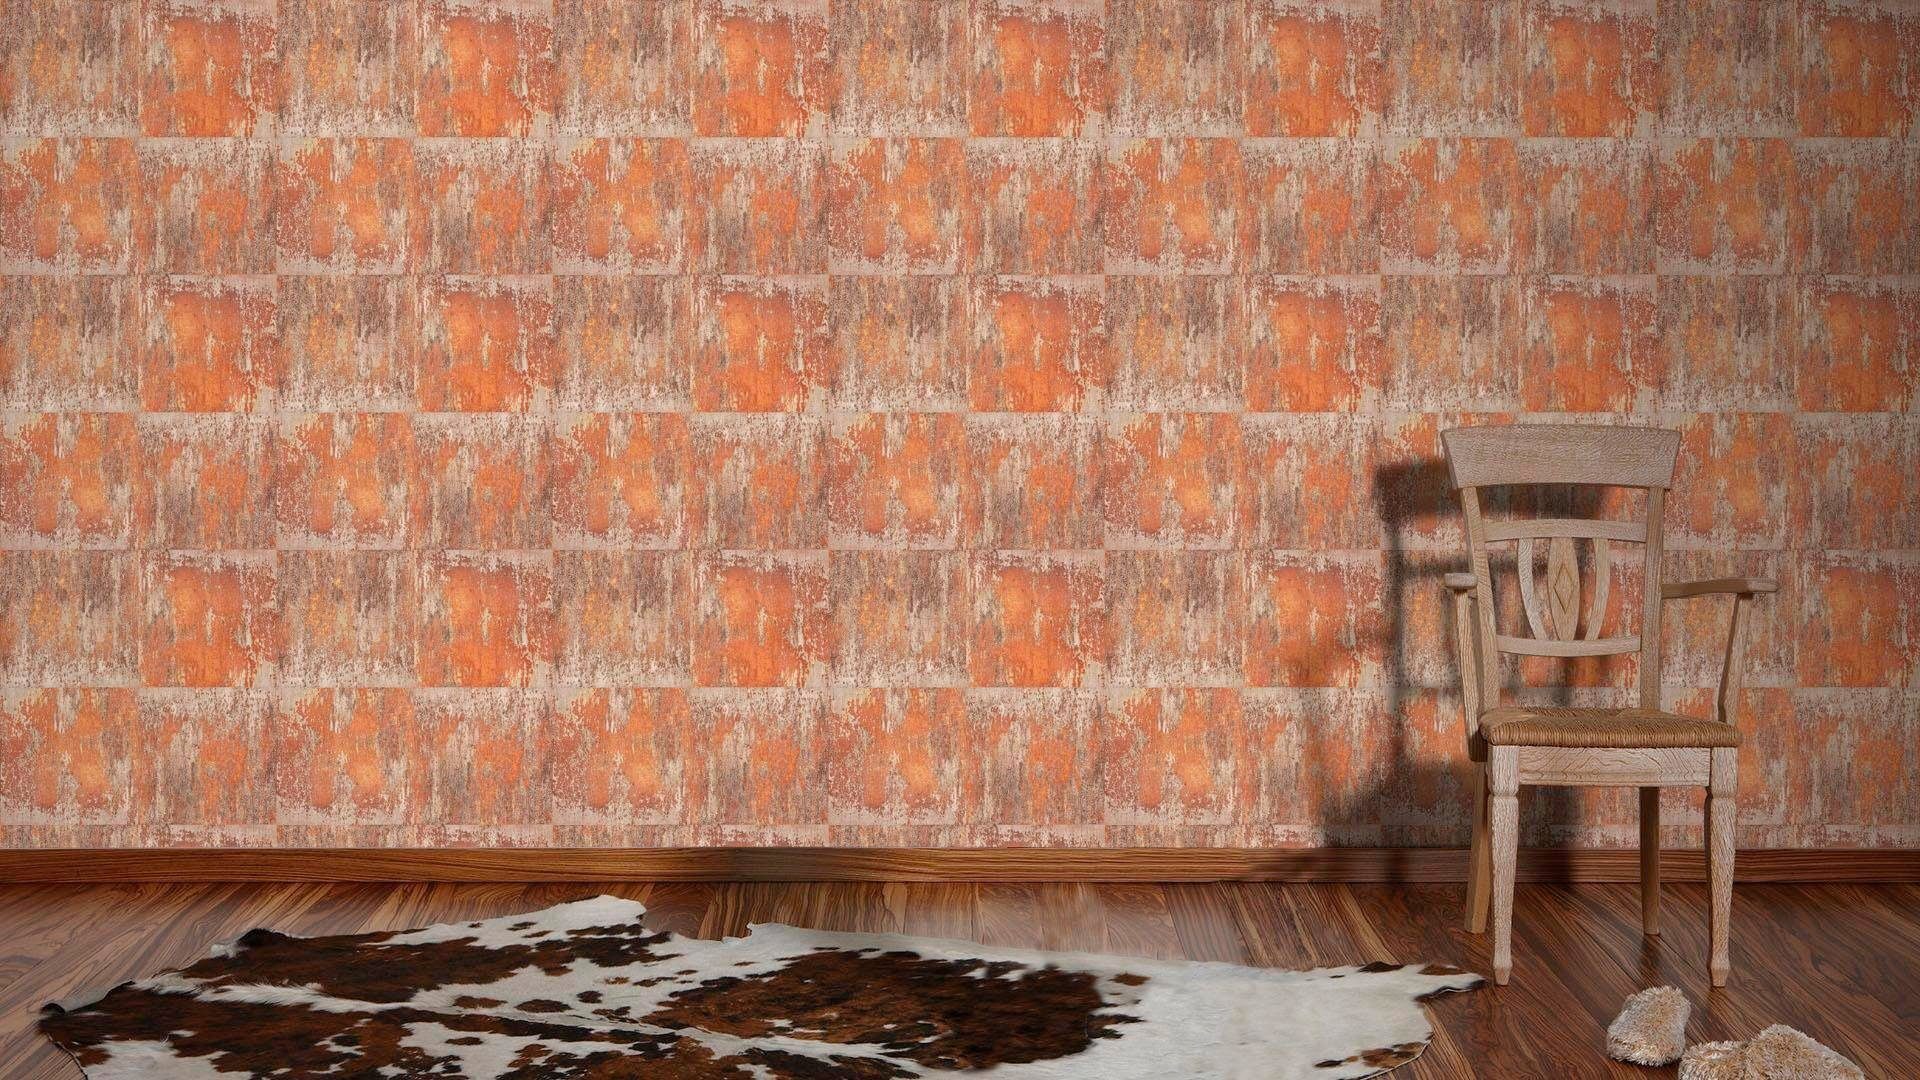 Rostoptik Création A.S. Metallic Vliestapete living rostbraun/orange/hellbraun Tapete walls Materials, Rost-Optik,